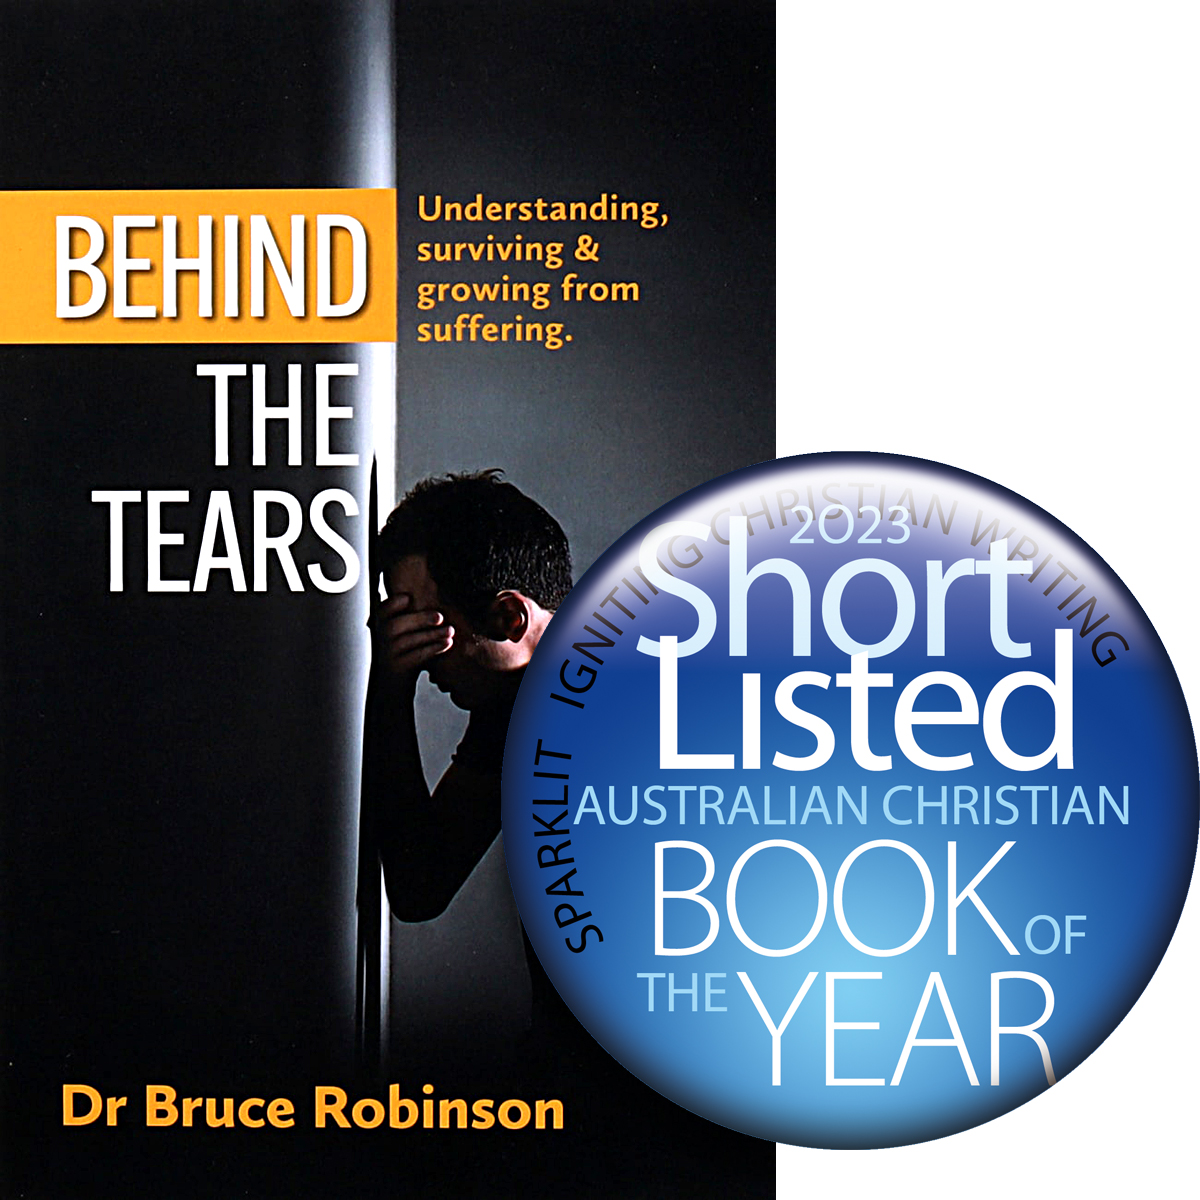 Behind the Tears: Understanding, Surviving & Growing From